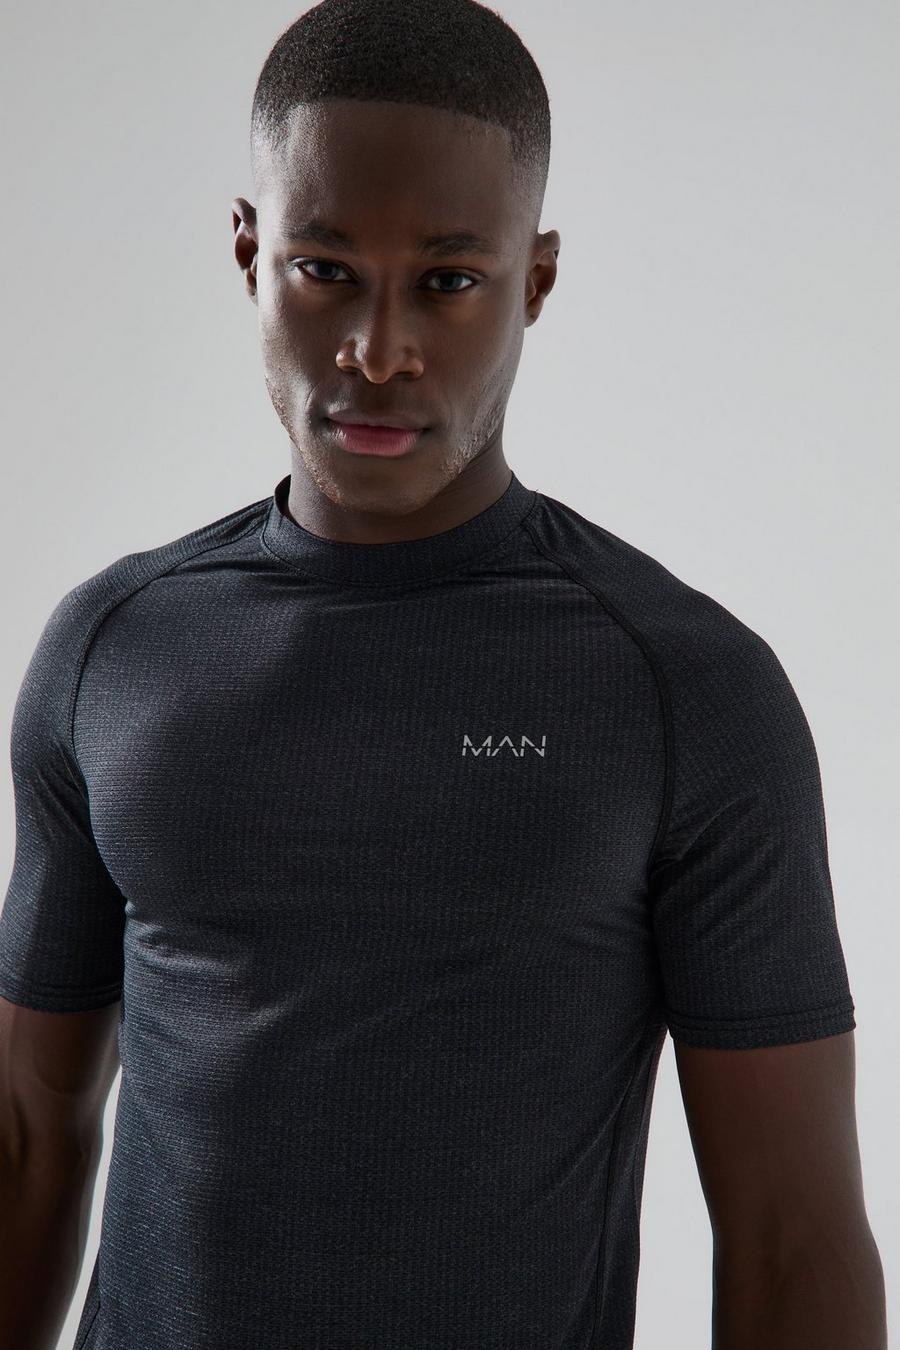 Camiseta MAN Active jaspeada ajustada al músculo, Black